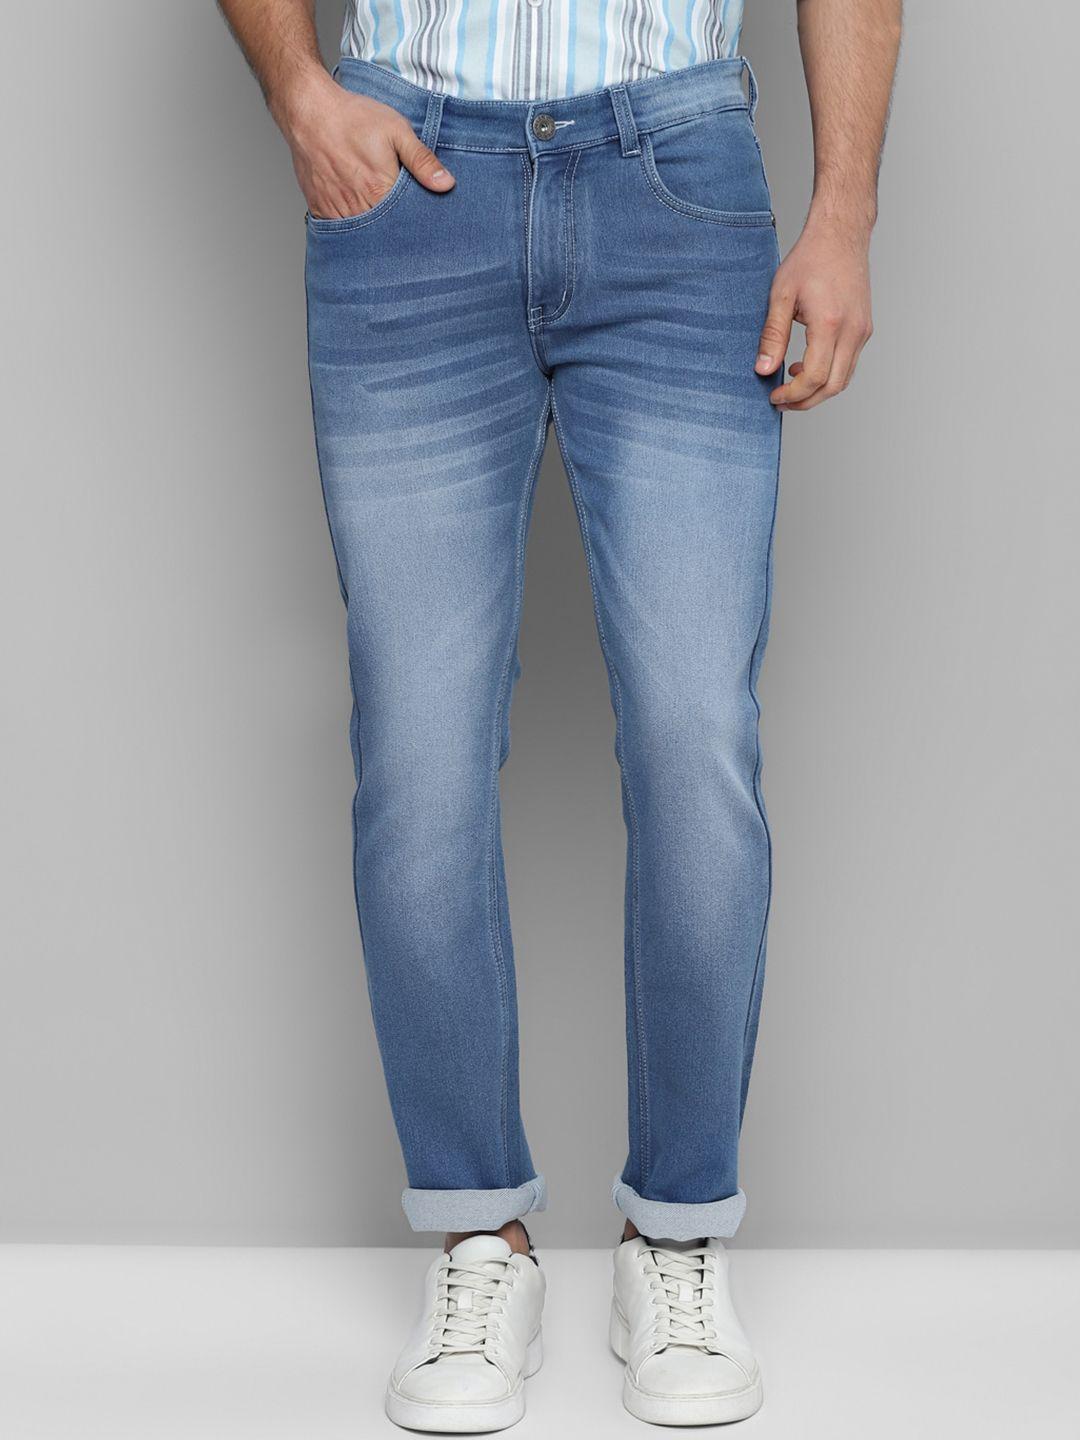 allen-cooper-men-urban-slim-fit-heavy-fade-stretchable-cotton-jeans